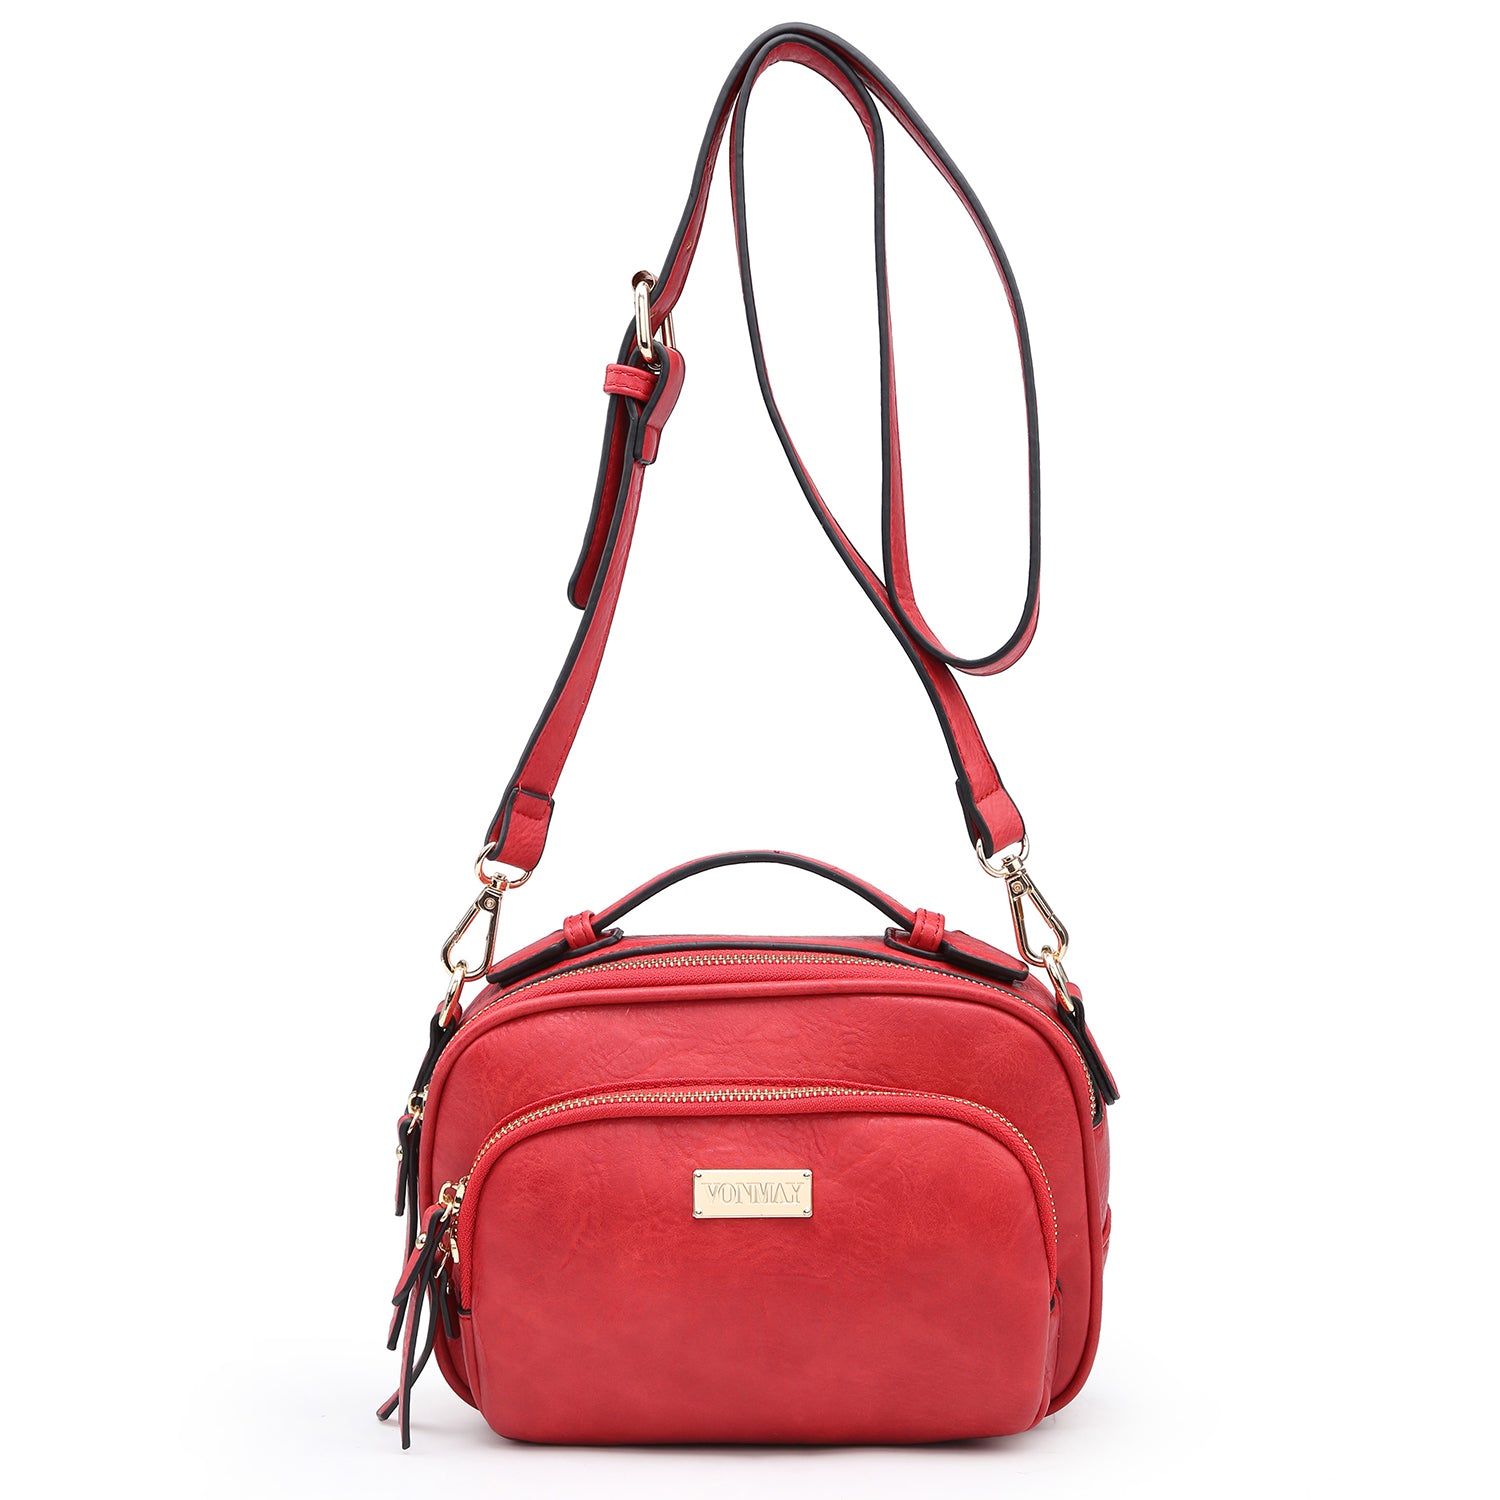 Qwzndzgr Weimei Chain Bag Women's 2022 New Leisure Fashion Mouth Red Bag Handheld Women's Bag Western-style Single-Shoulder Crossbody Bag, Adult